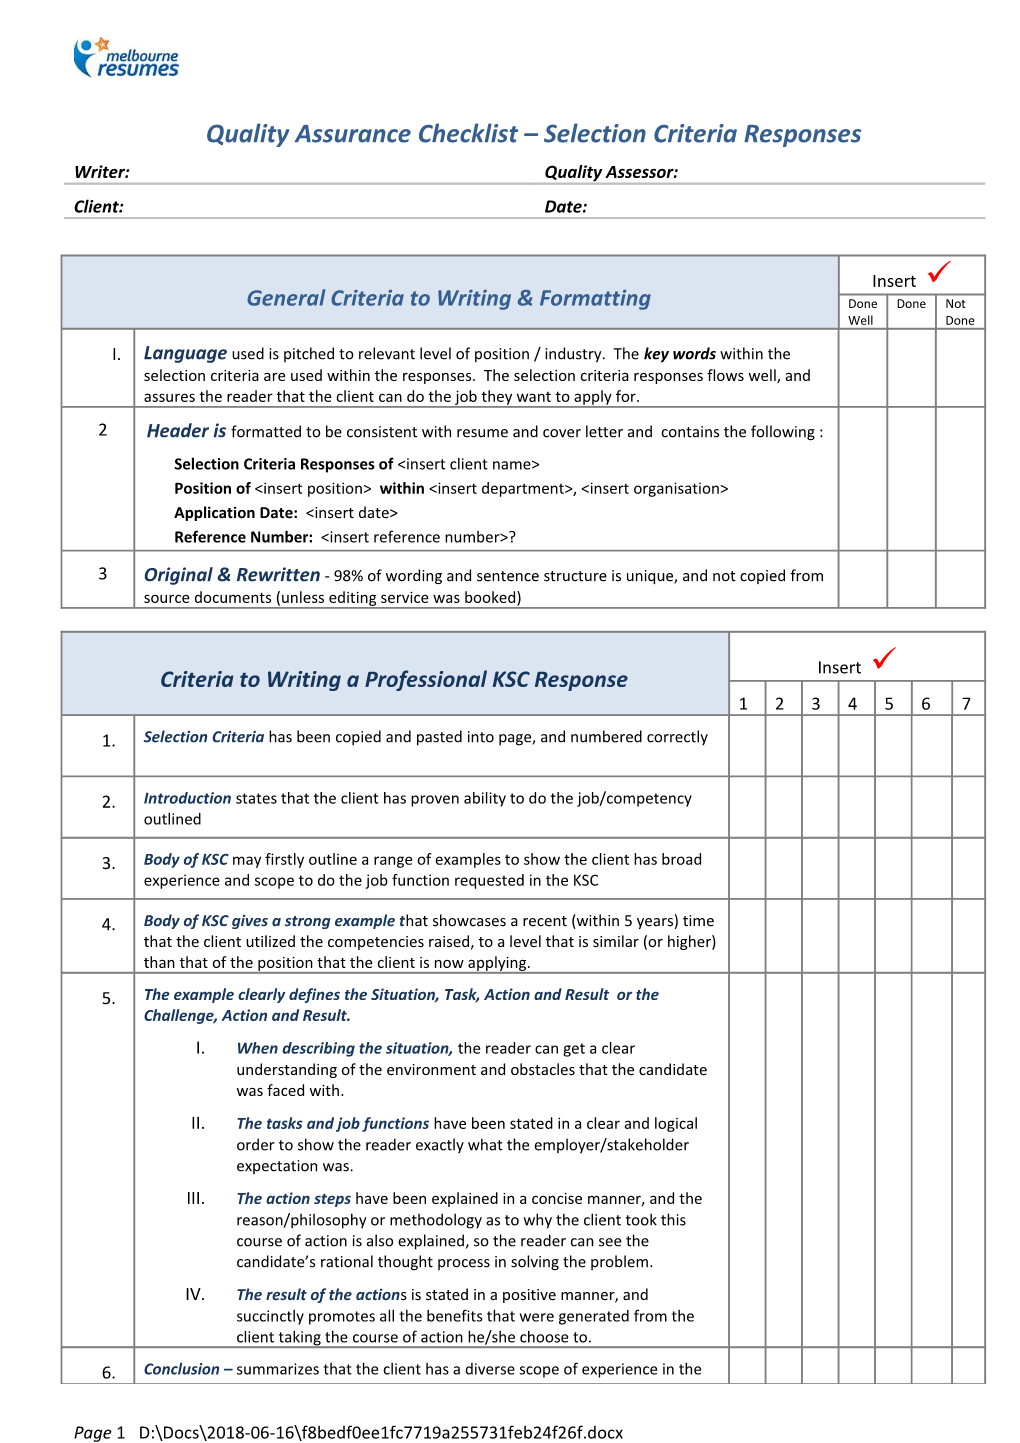 Quality Assurance Checklist Selection Criteria Responses